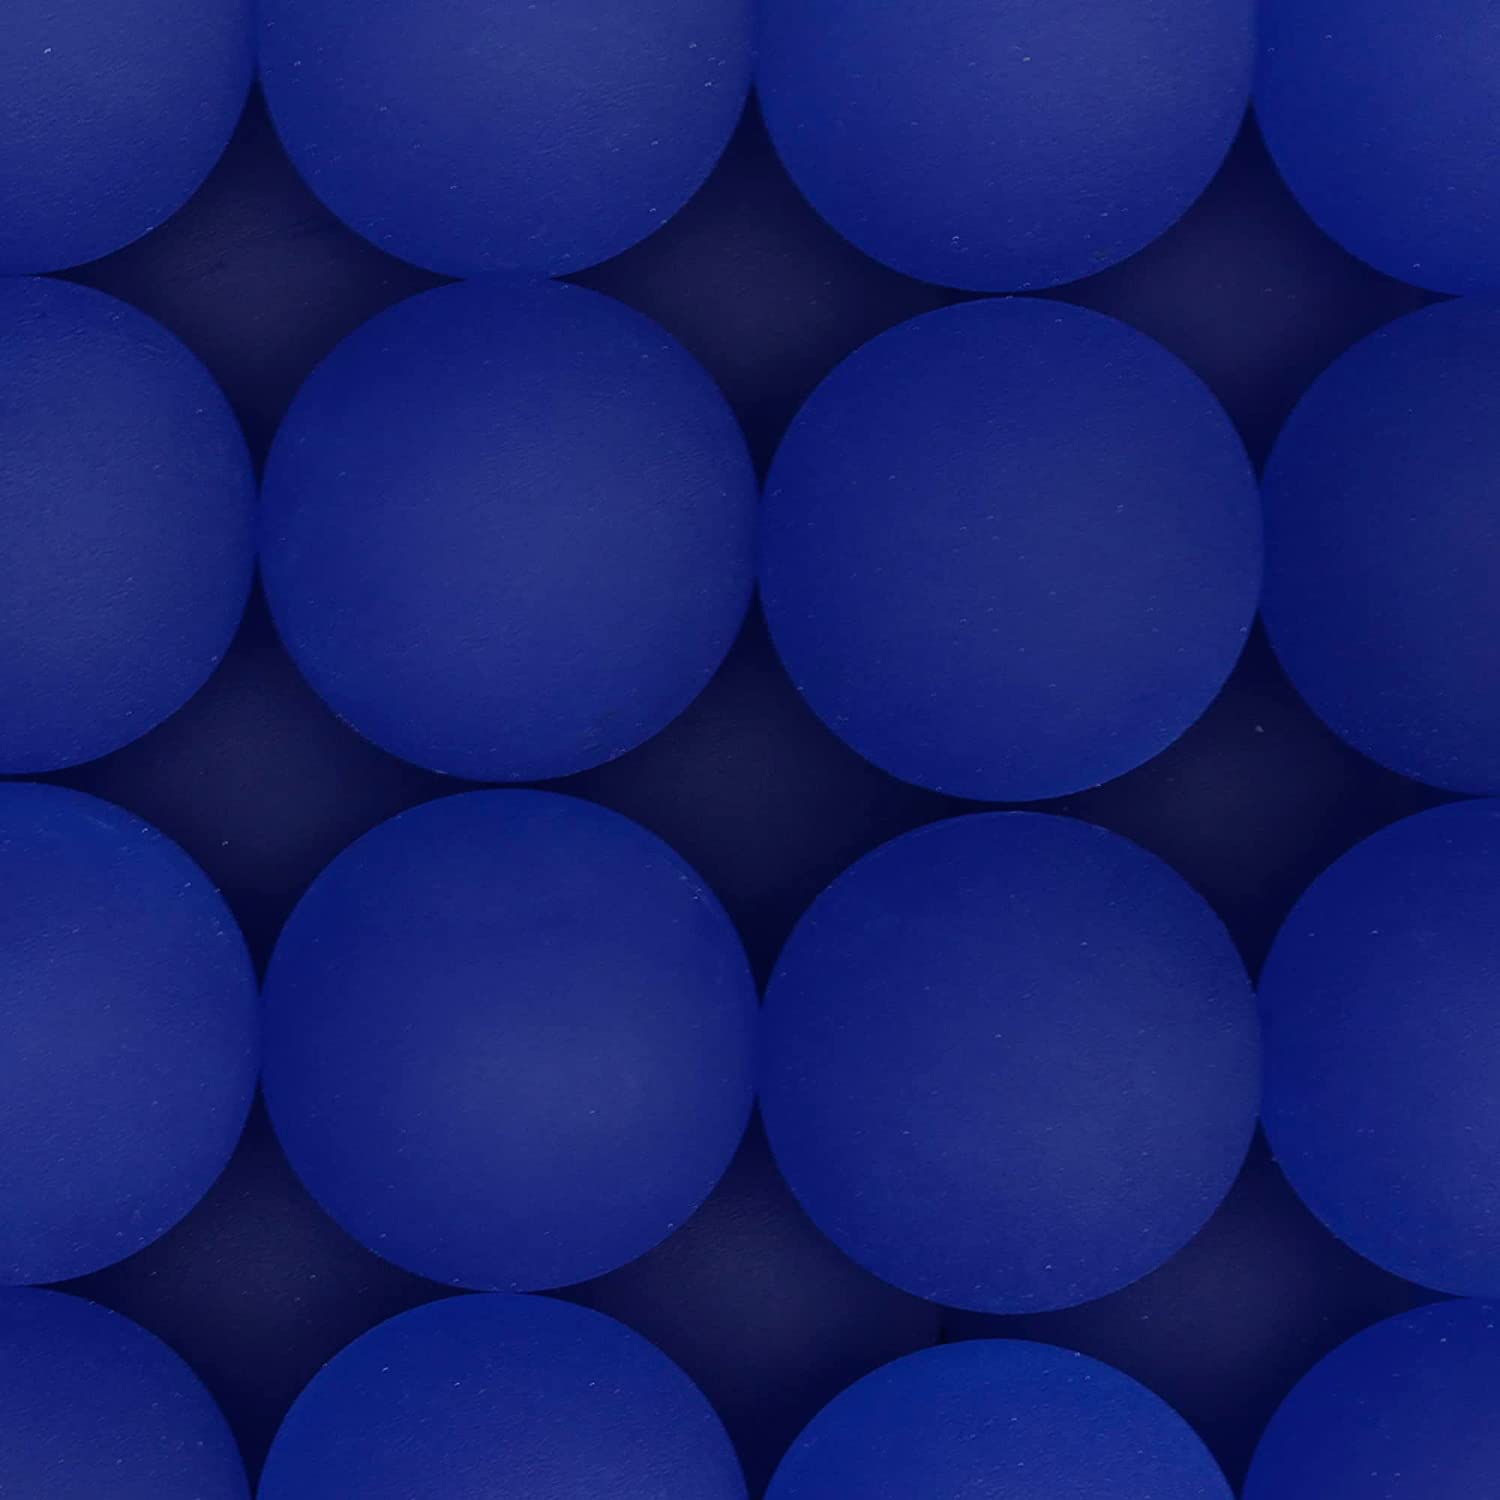 Glowing Bounce Balls Blue 45 mm